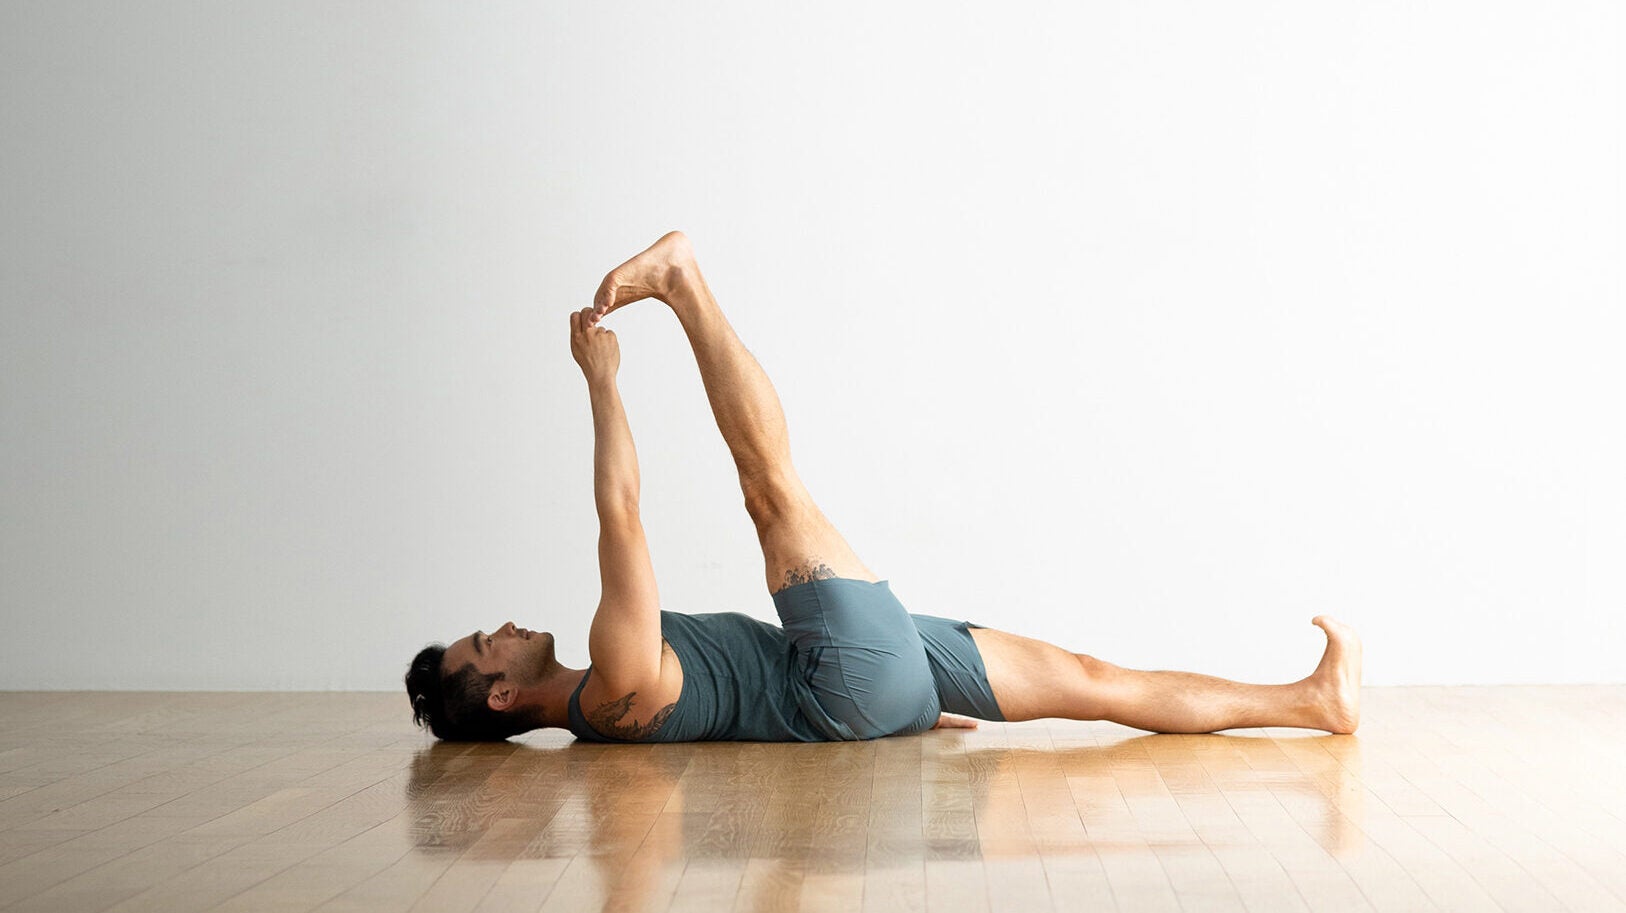 Share 68+ lying yoga poses super hot